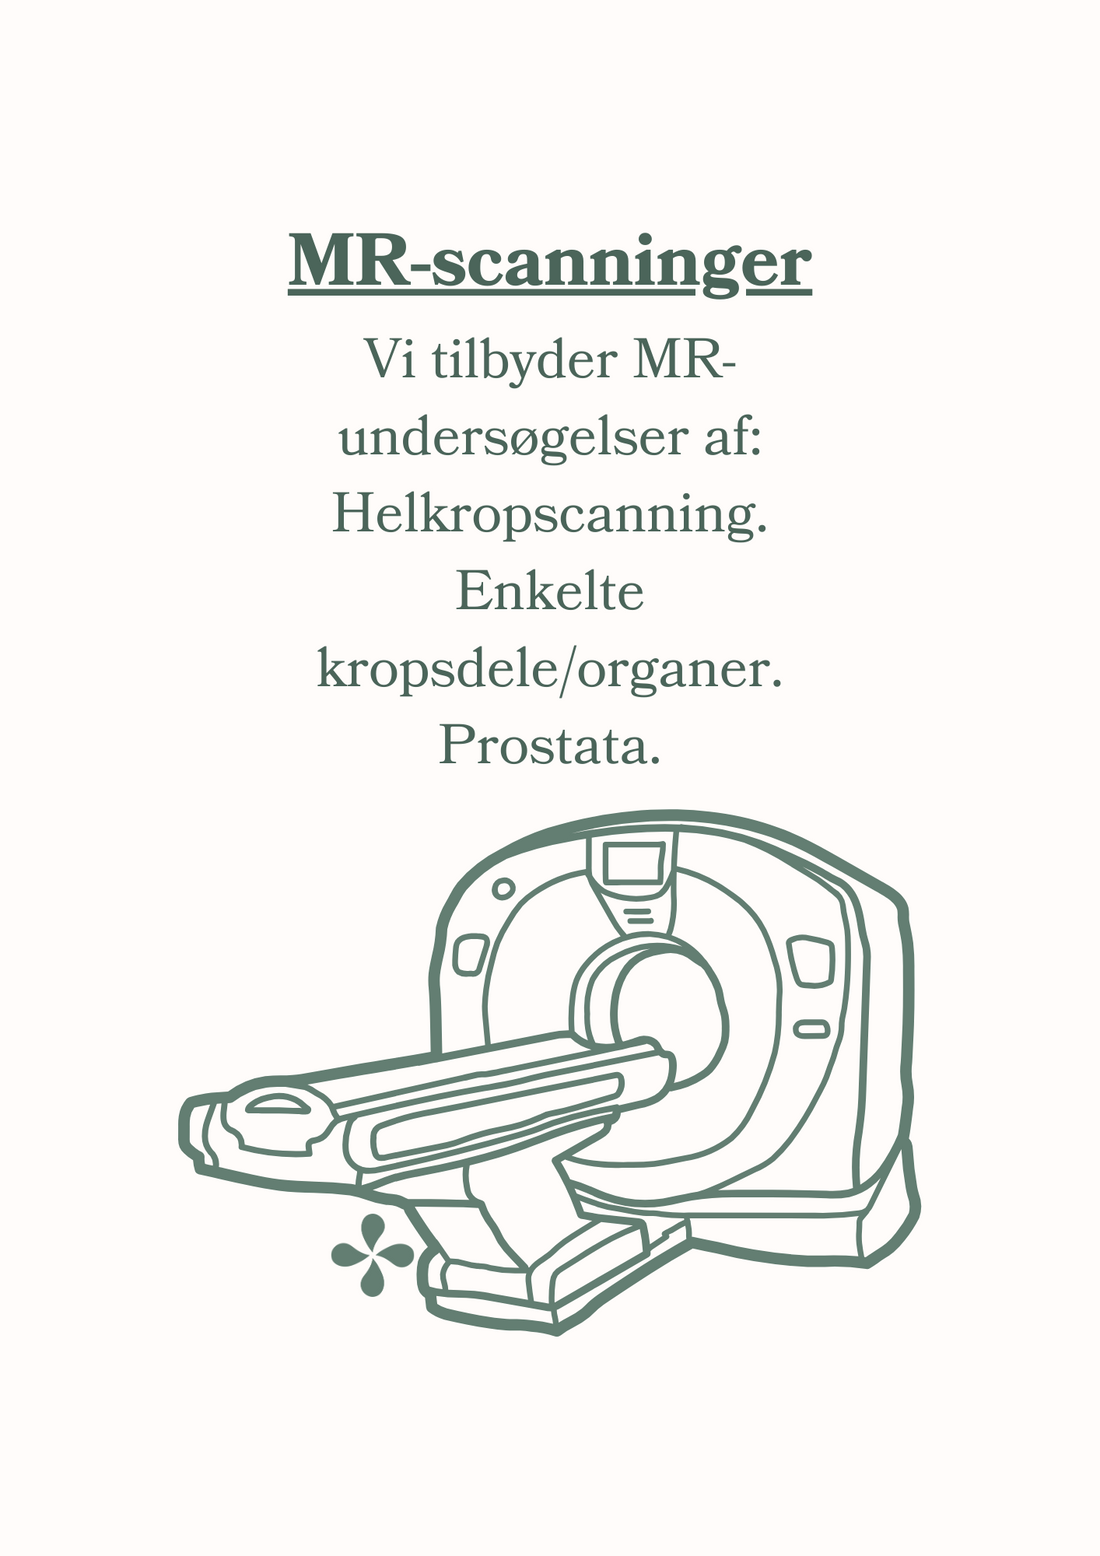 MR-scanning